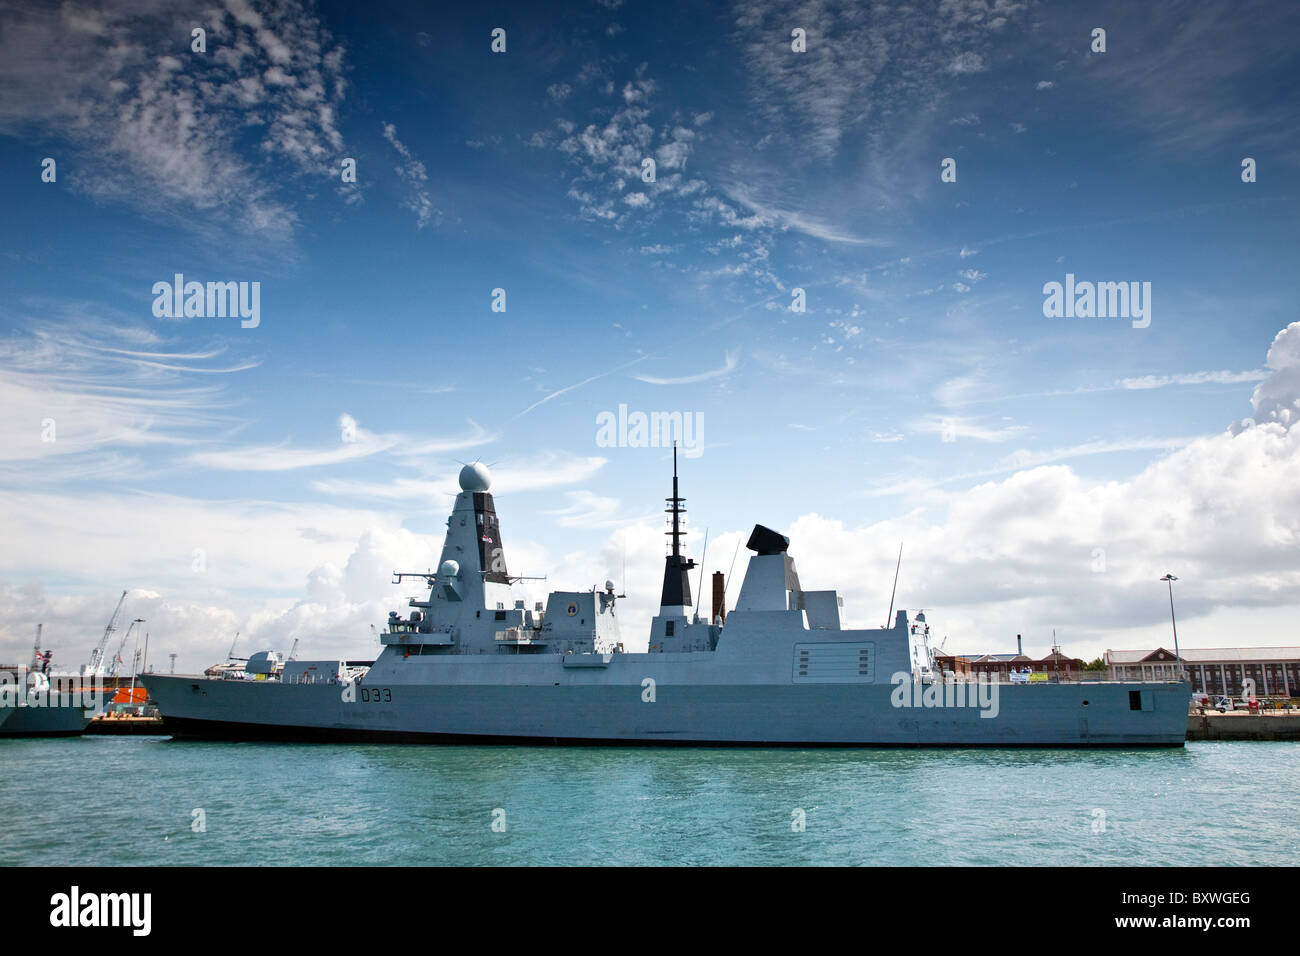 Royal Navy Type 45 Destroyer HMS Dauntless Docked in Portsmouth Naval Dockyard England United Kingdom Stock Photo